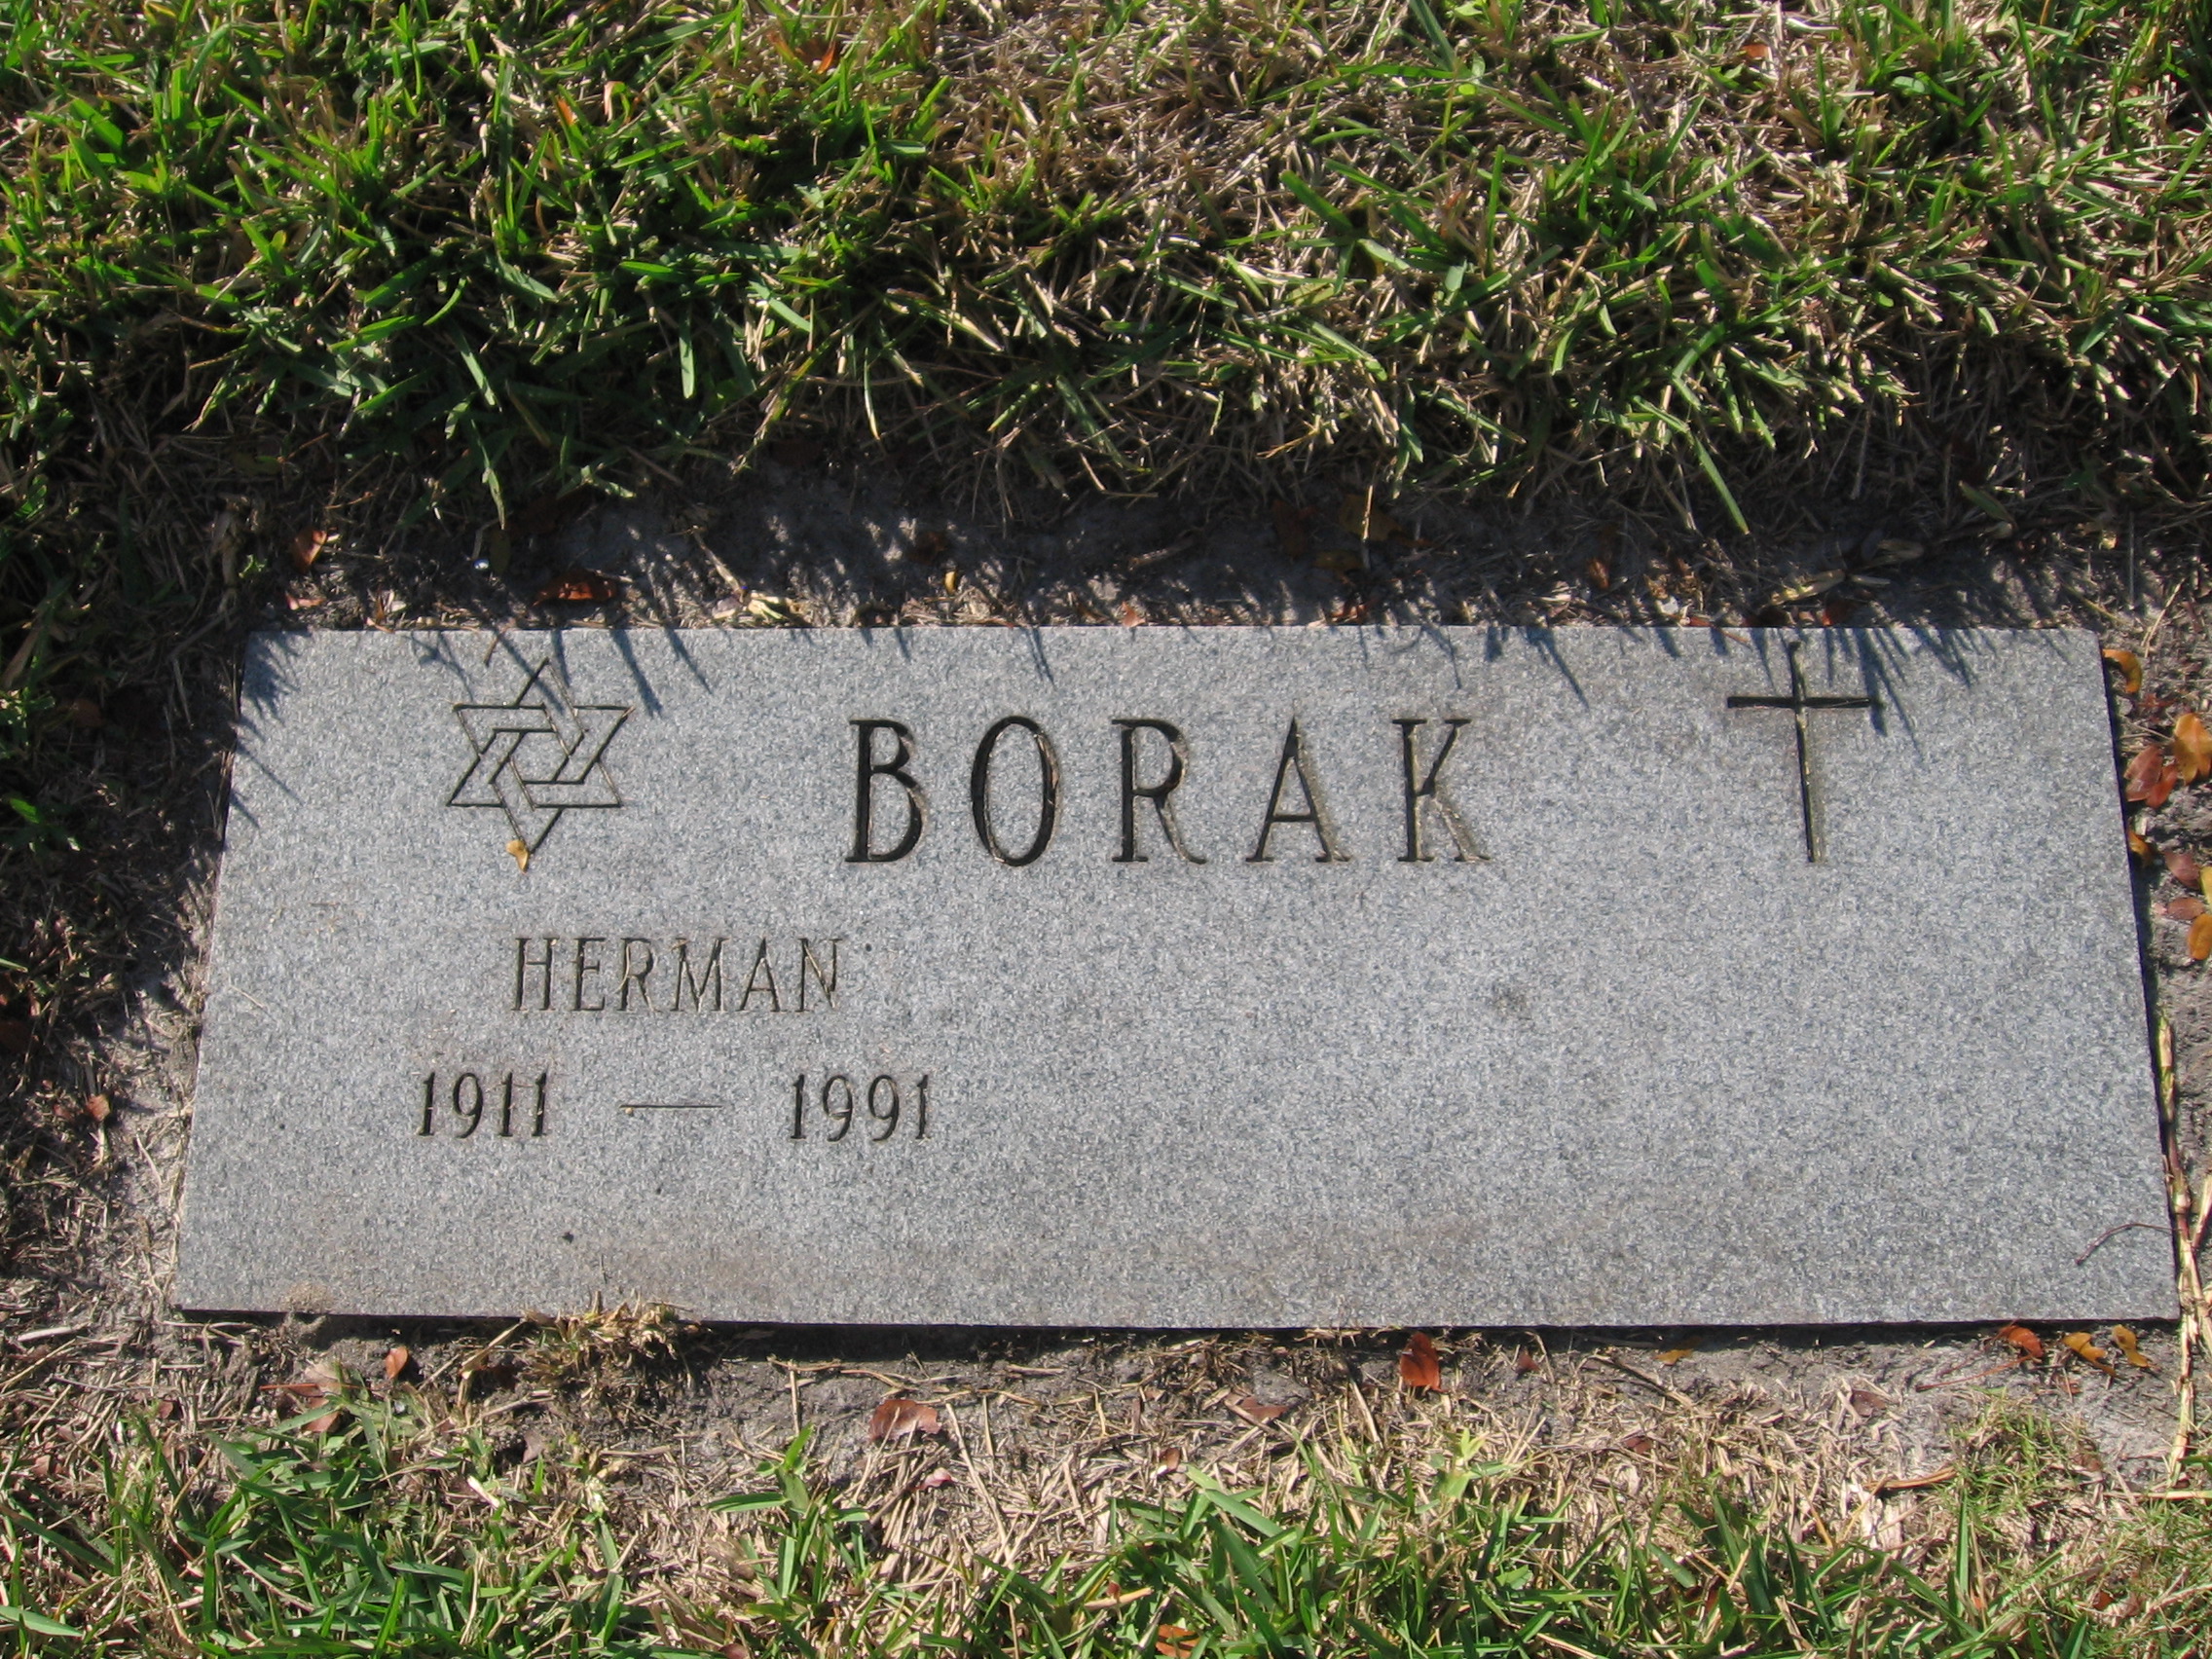 Herman Borak